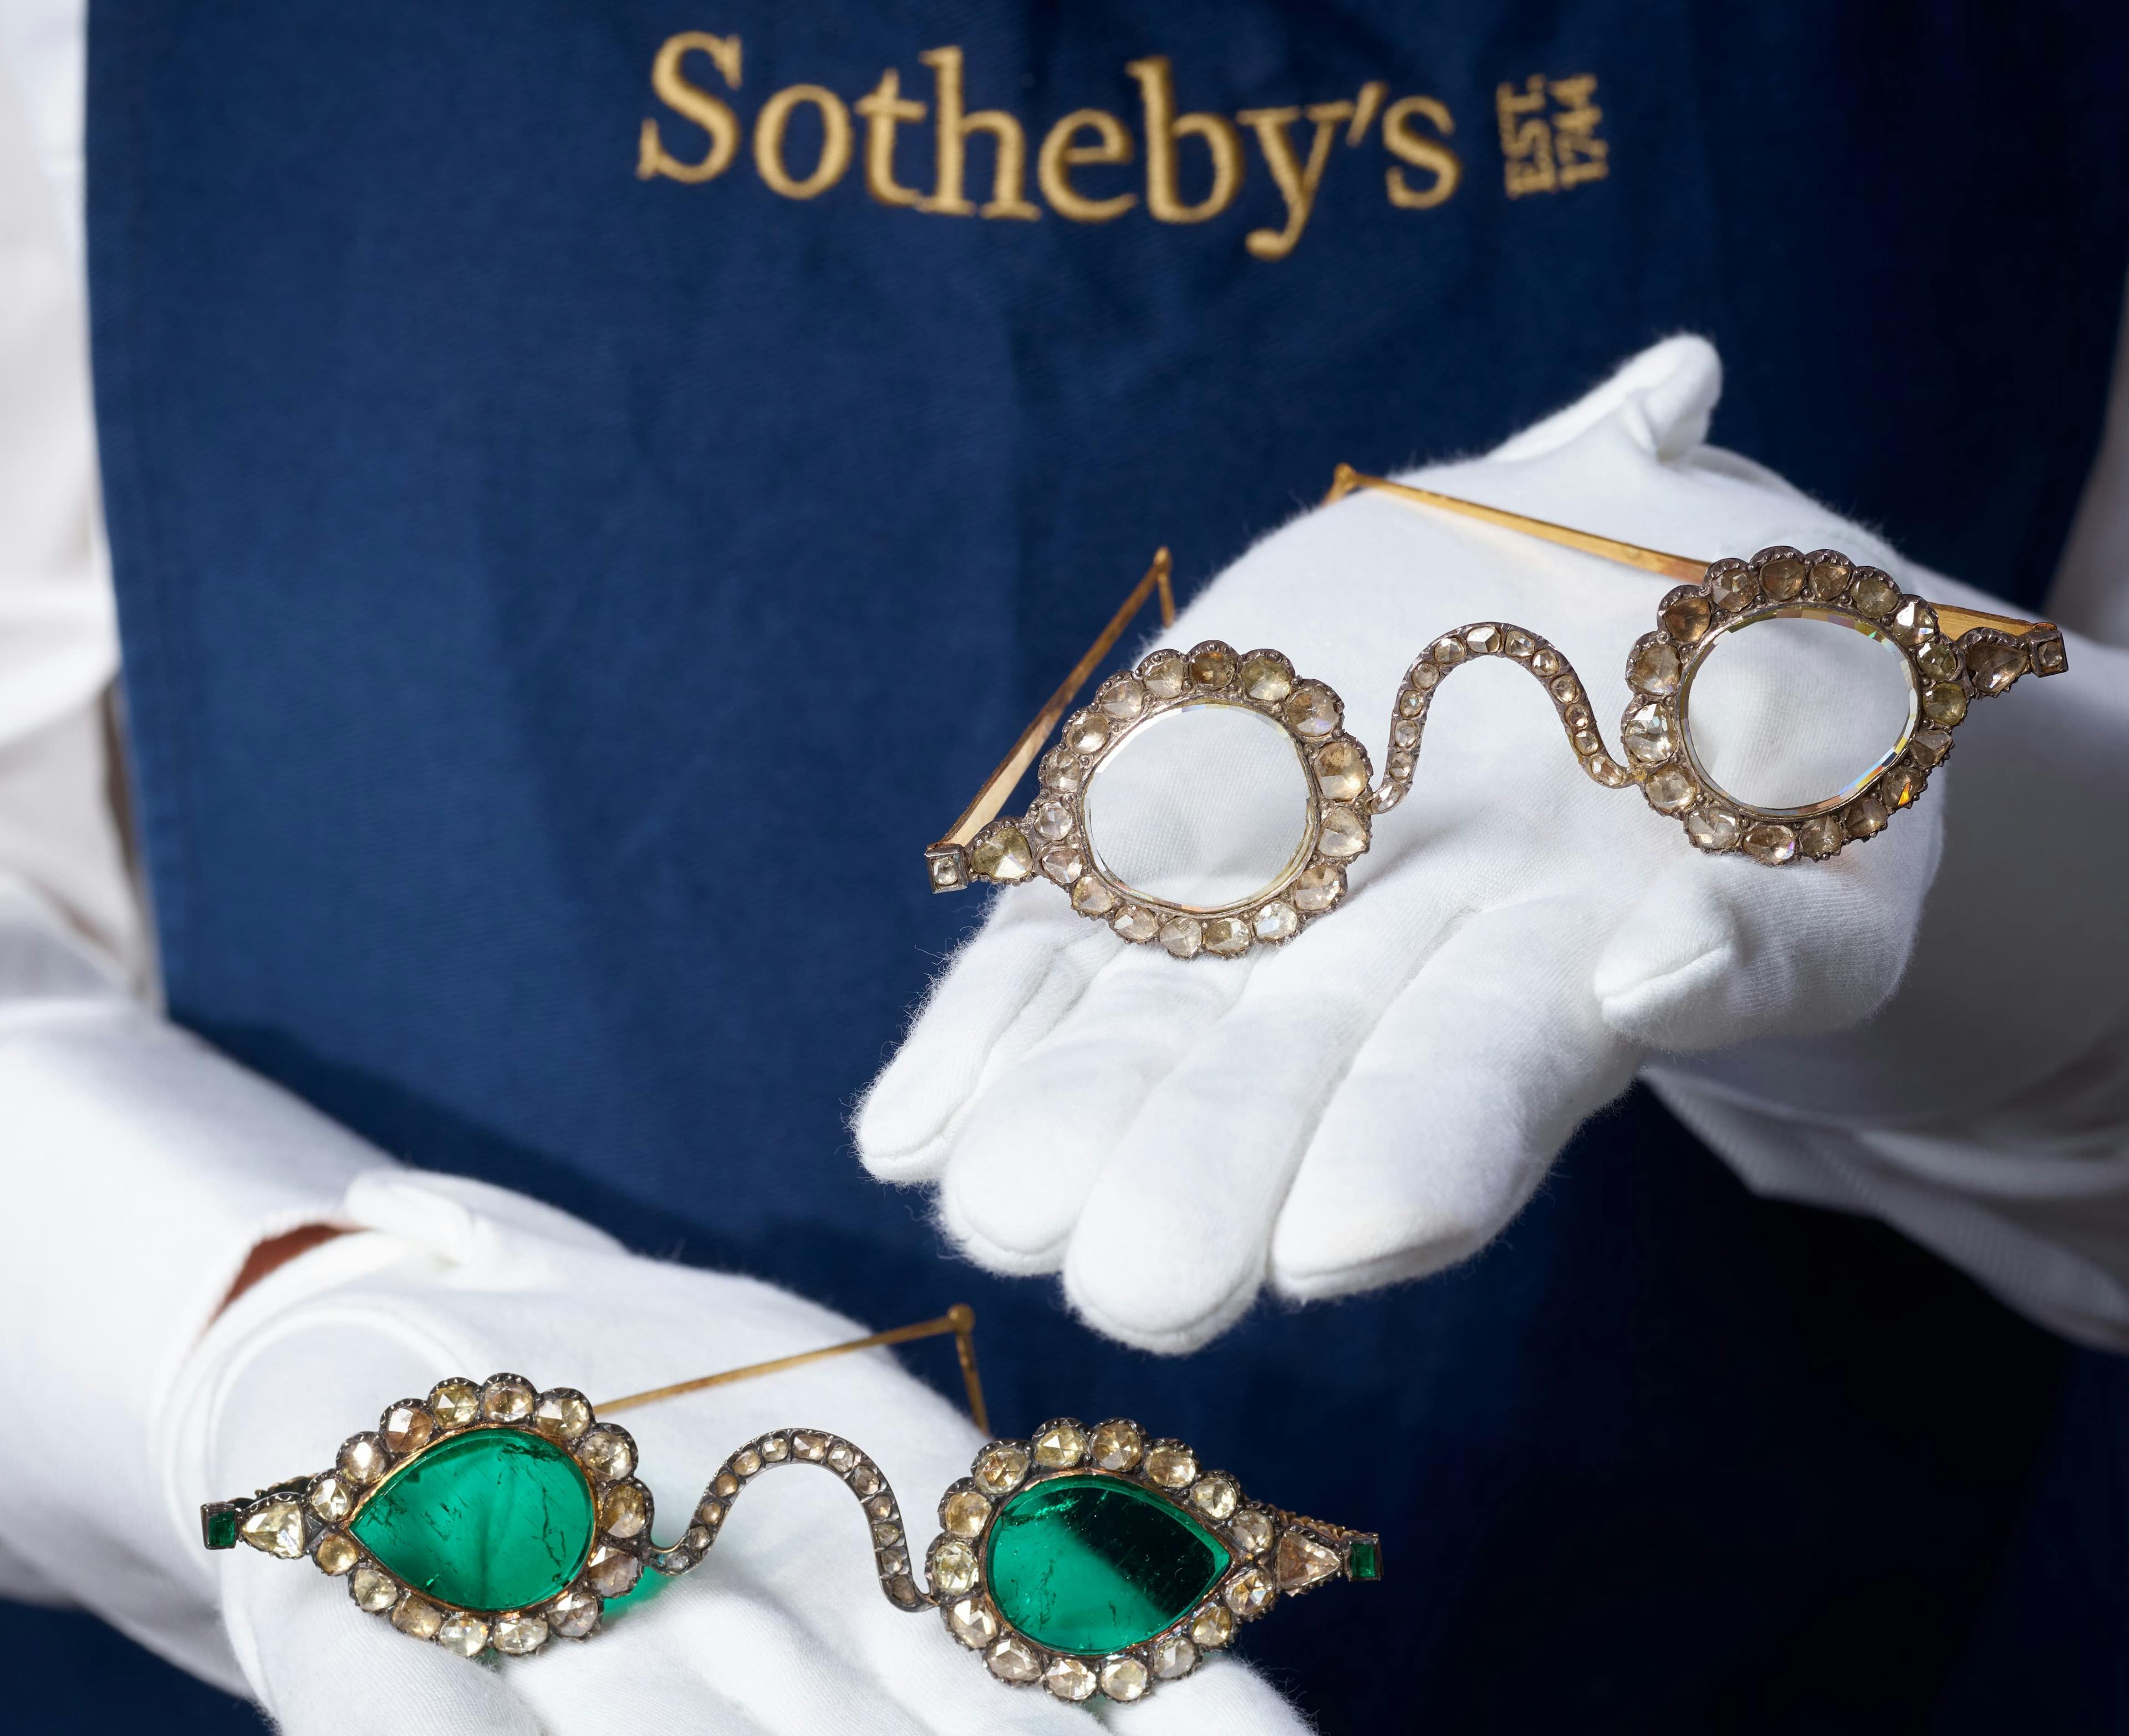 Bid on bejeweled 17th century eyeglasses at Sotheby’s London